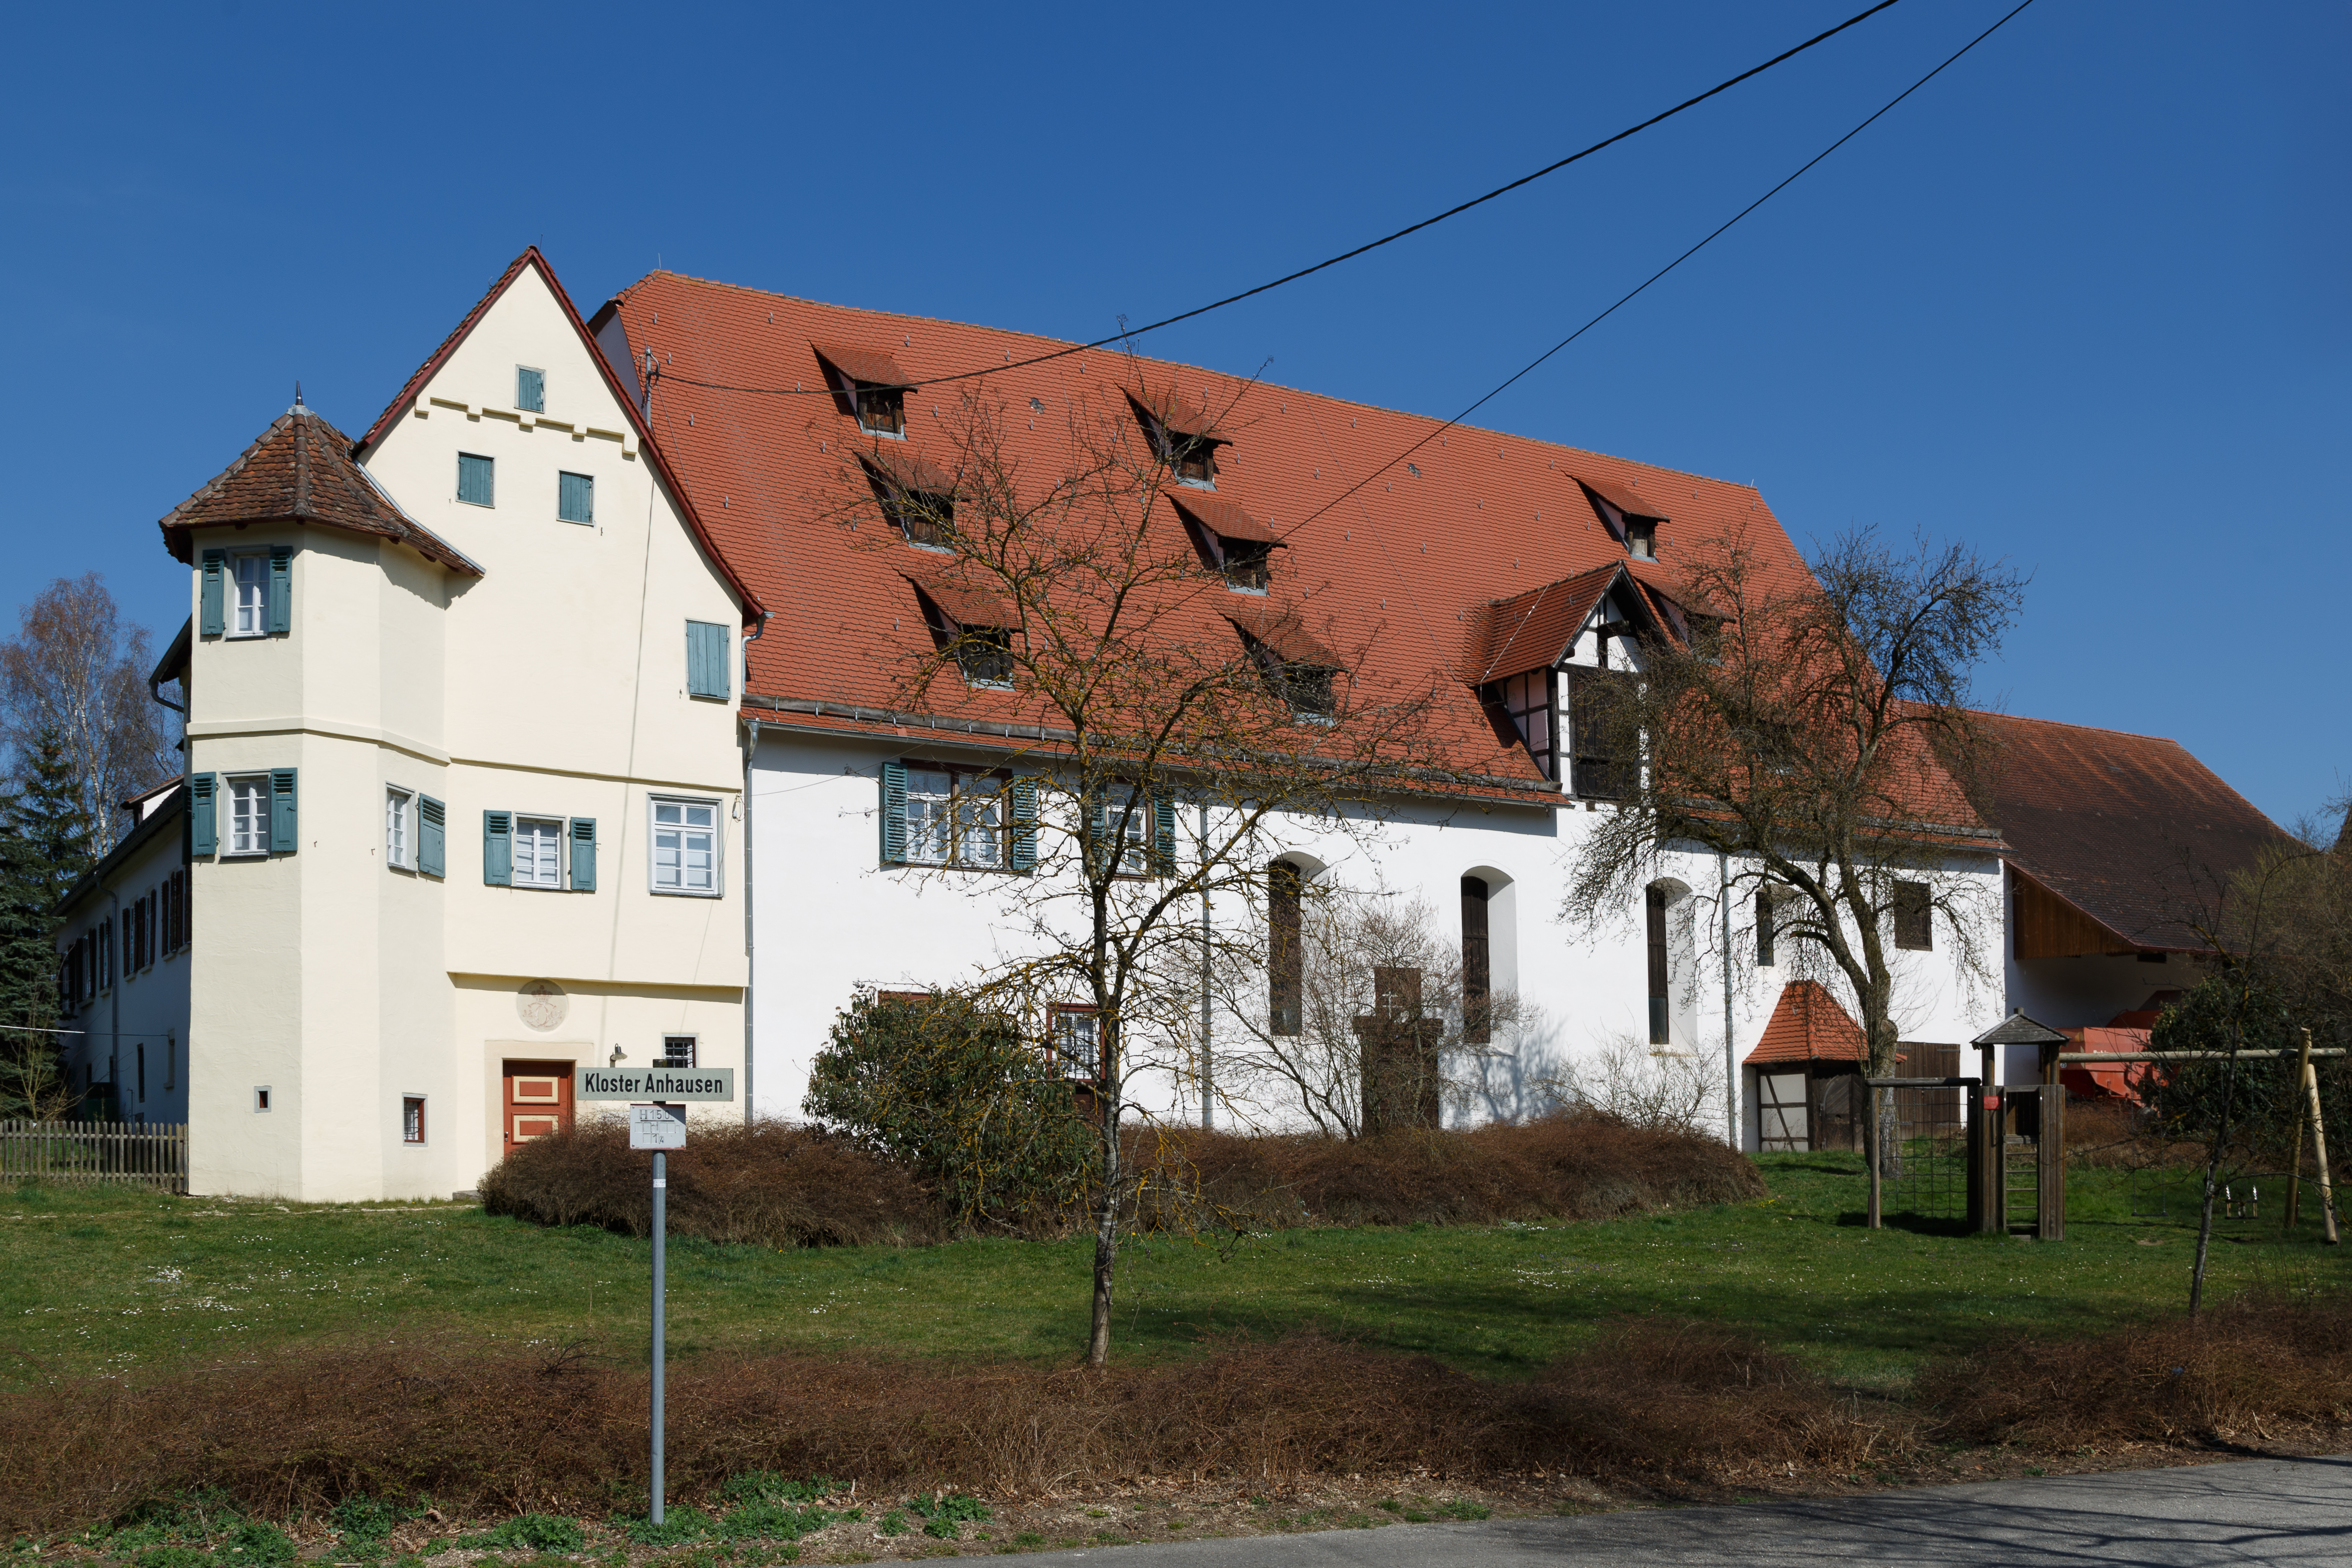 Anhausen Baden-Württemberg Germany-Former-Monastery-Anhausen-05